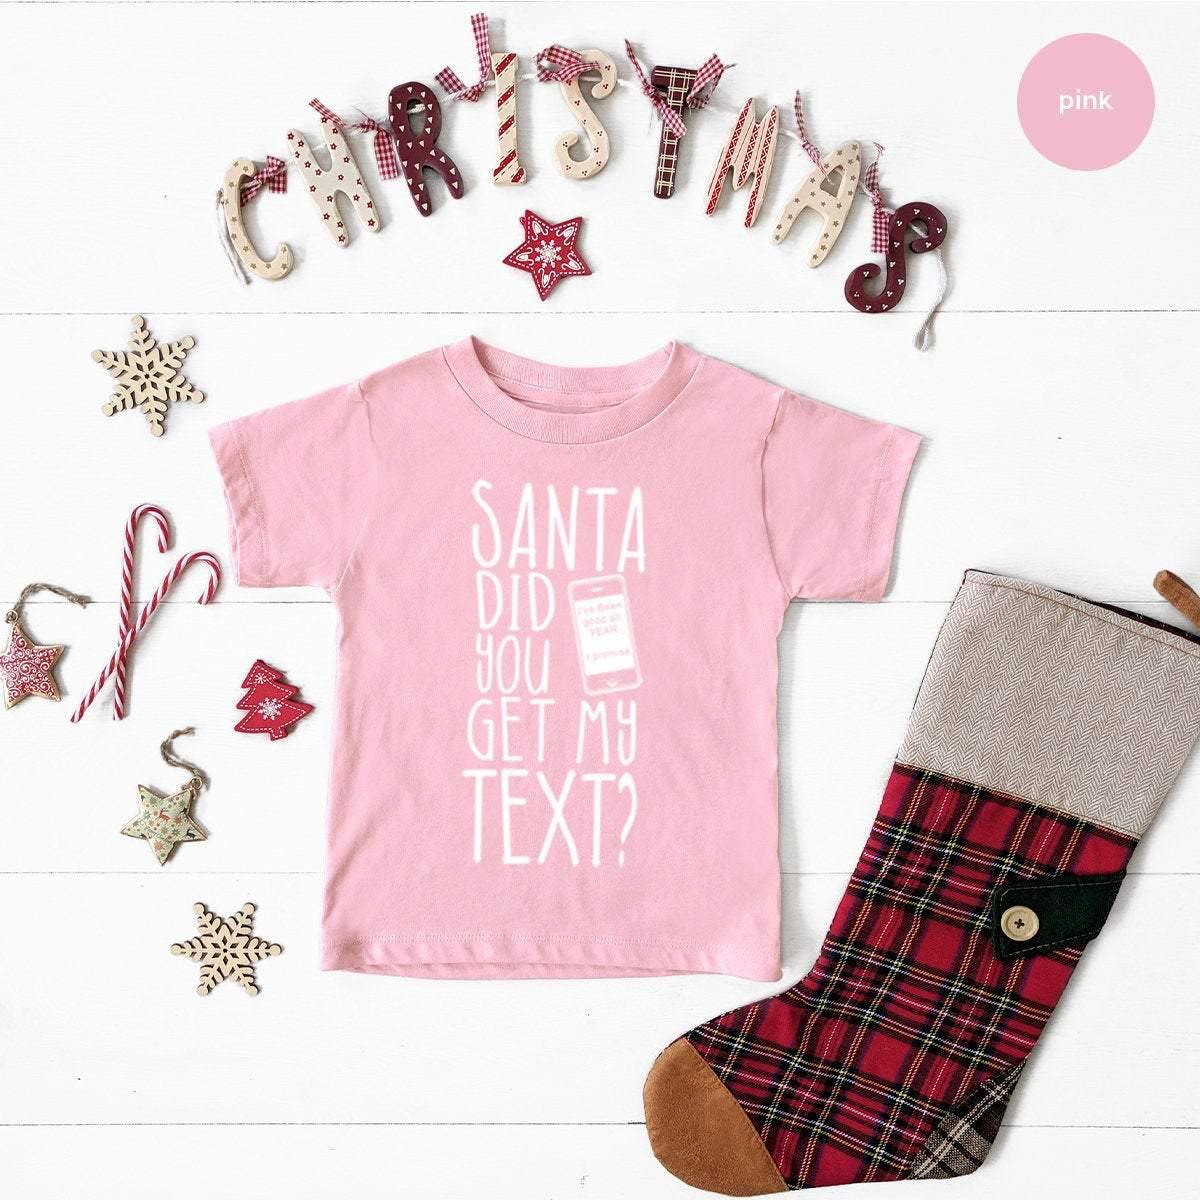 Christmas Toddler, Funny Christmas Tee, Funny Santa Youth, Christmas T Shirt, Santa Did You Get My Text Shirt, New Year T Shirt, Santa Gifts - Fastdeliverytees.com